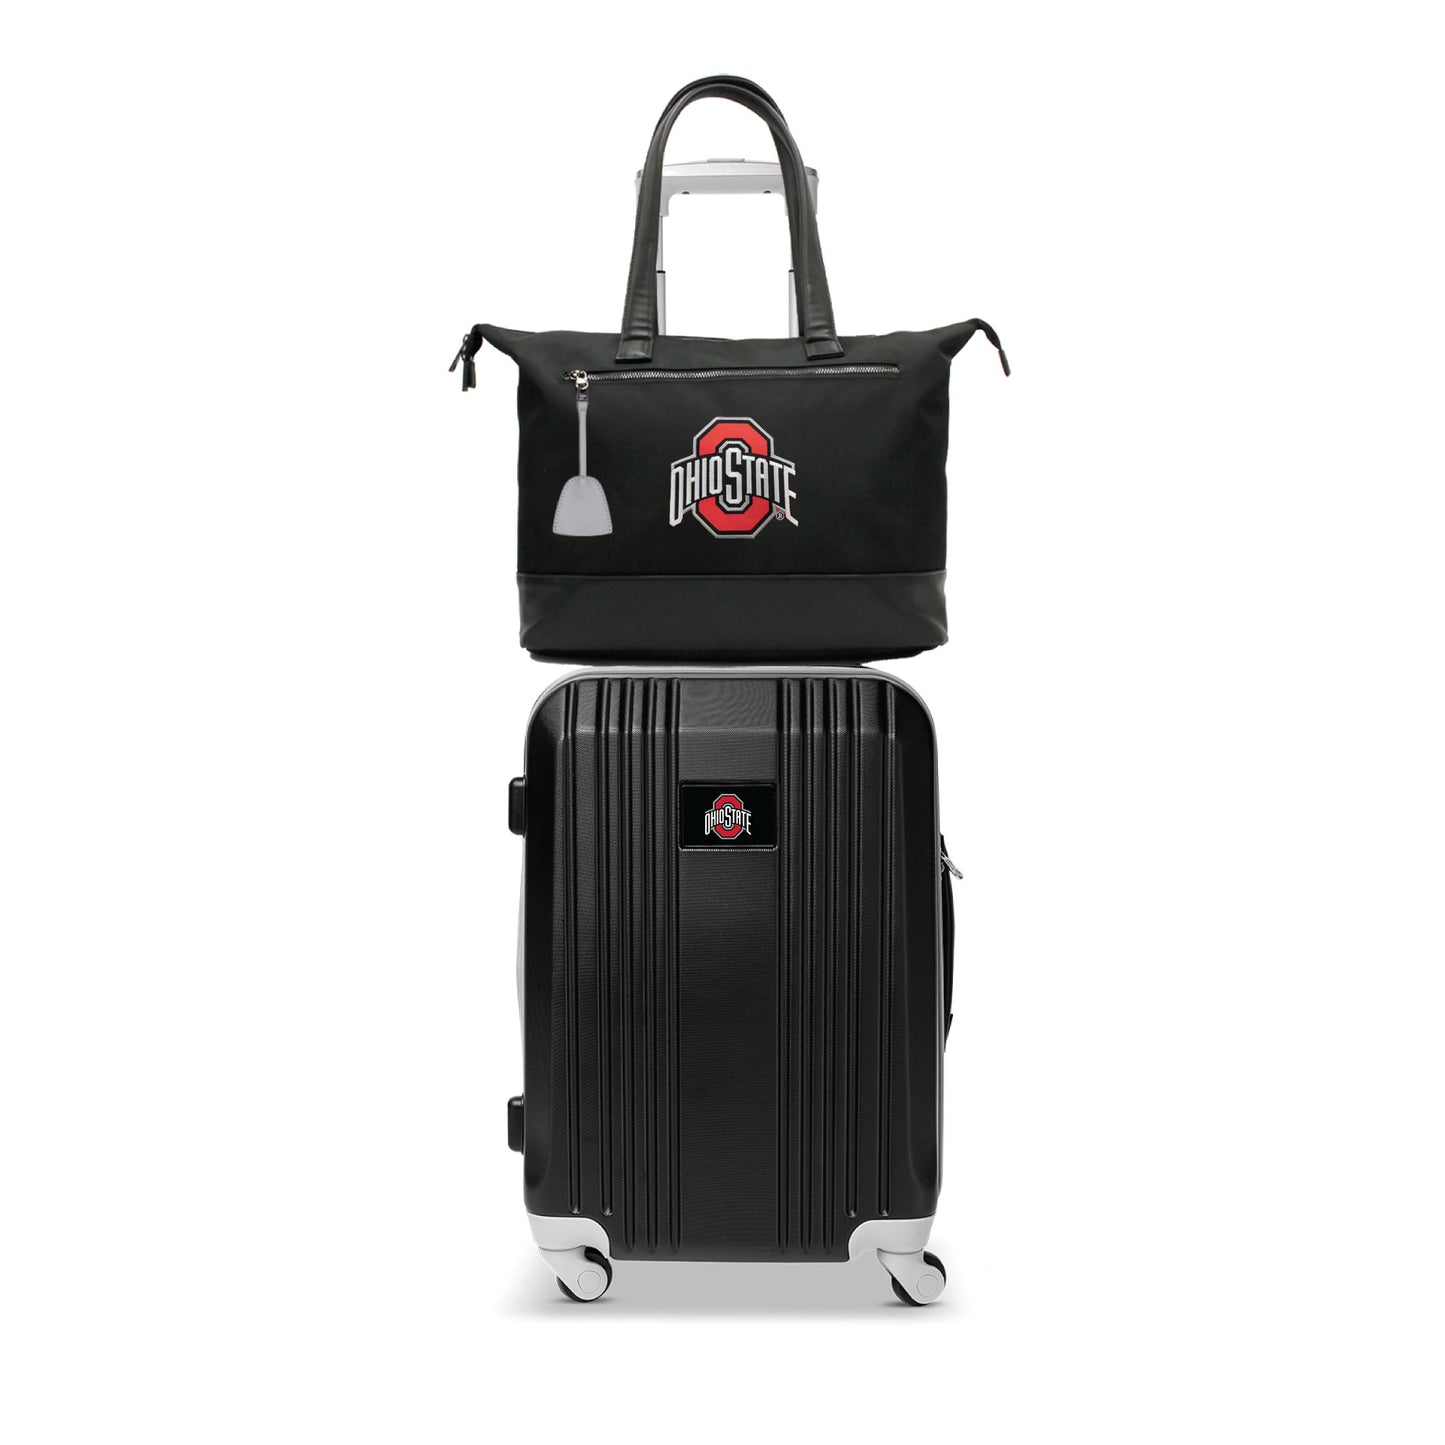 Ohio State Buckeyes Premium Laptop Tote Bag and Luggage Set